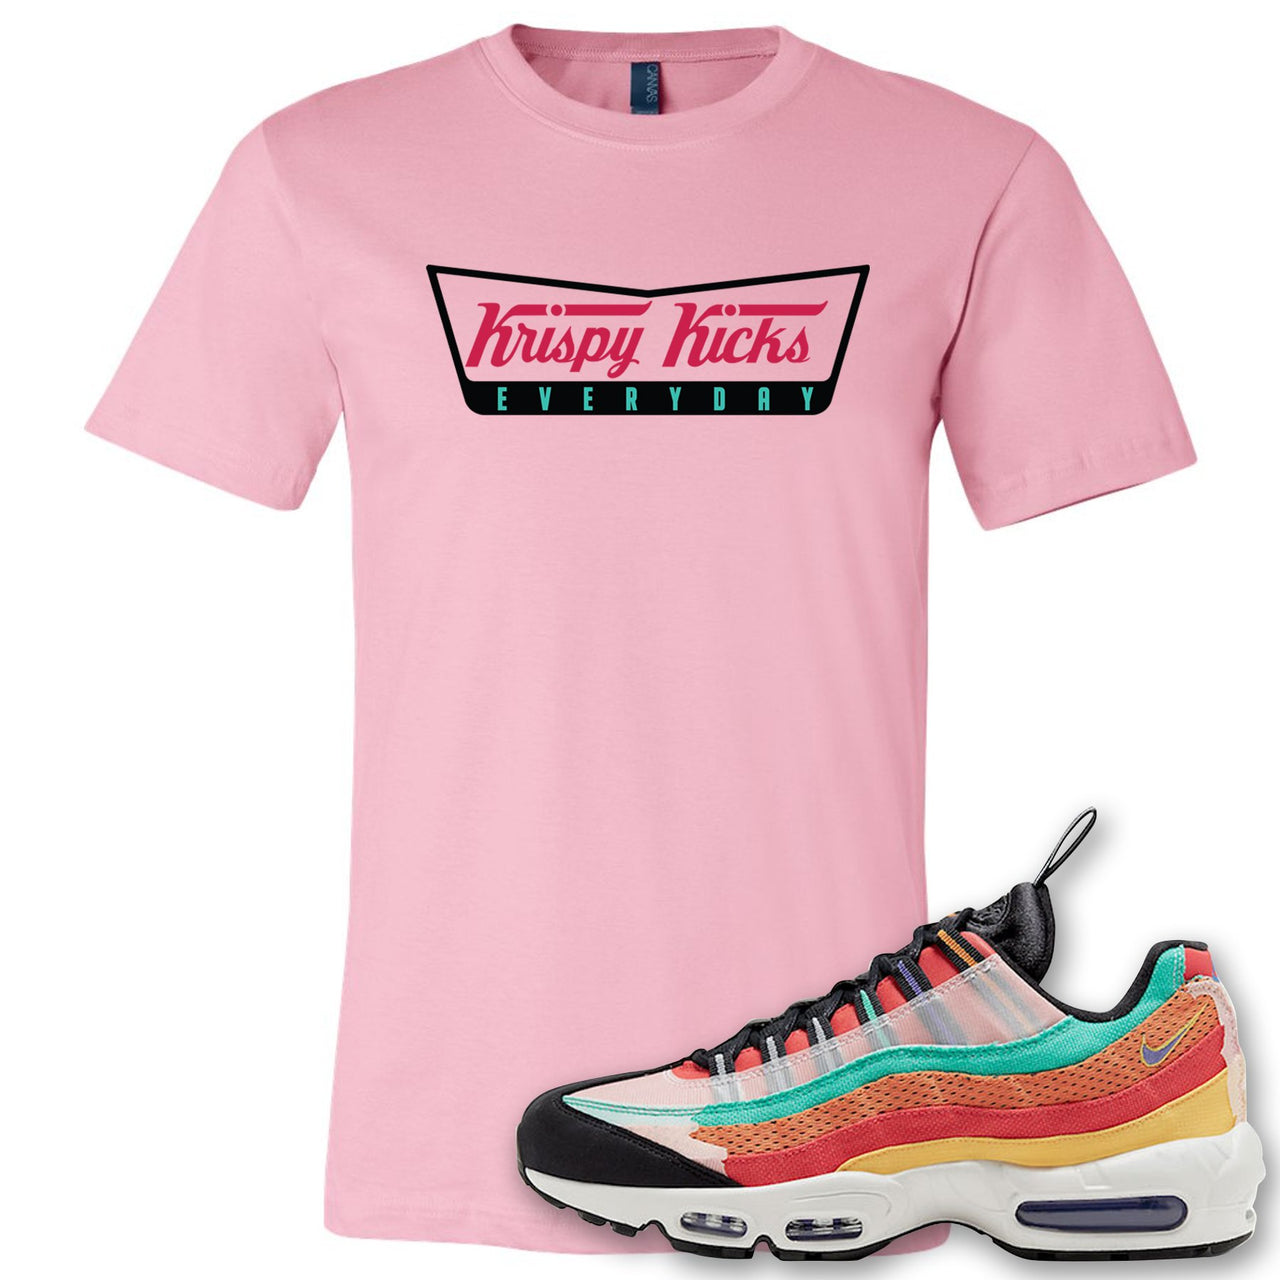 Air Max 95 Black History Month Sneaker Soft Pink T Shirt | Tees to match Nike Air Max 95 Black History Month Shoes | Krispy Kicks